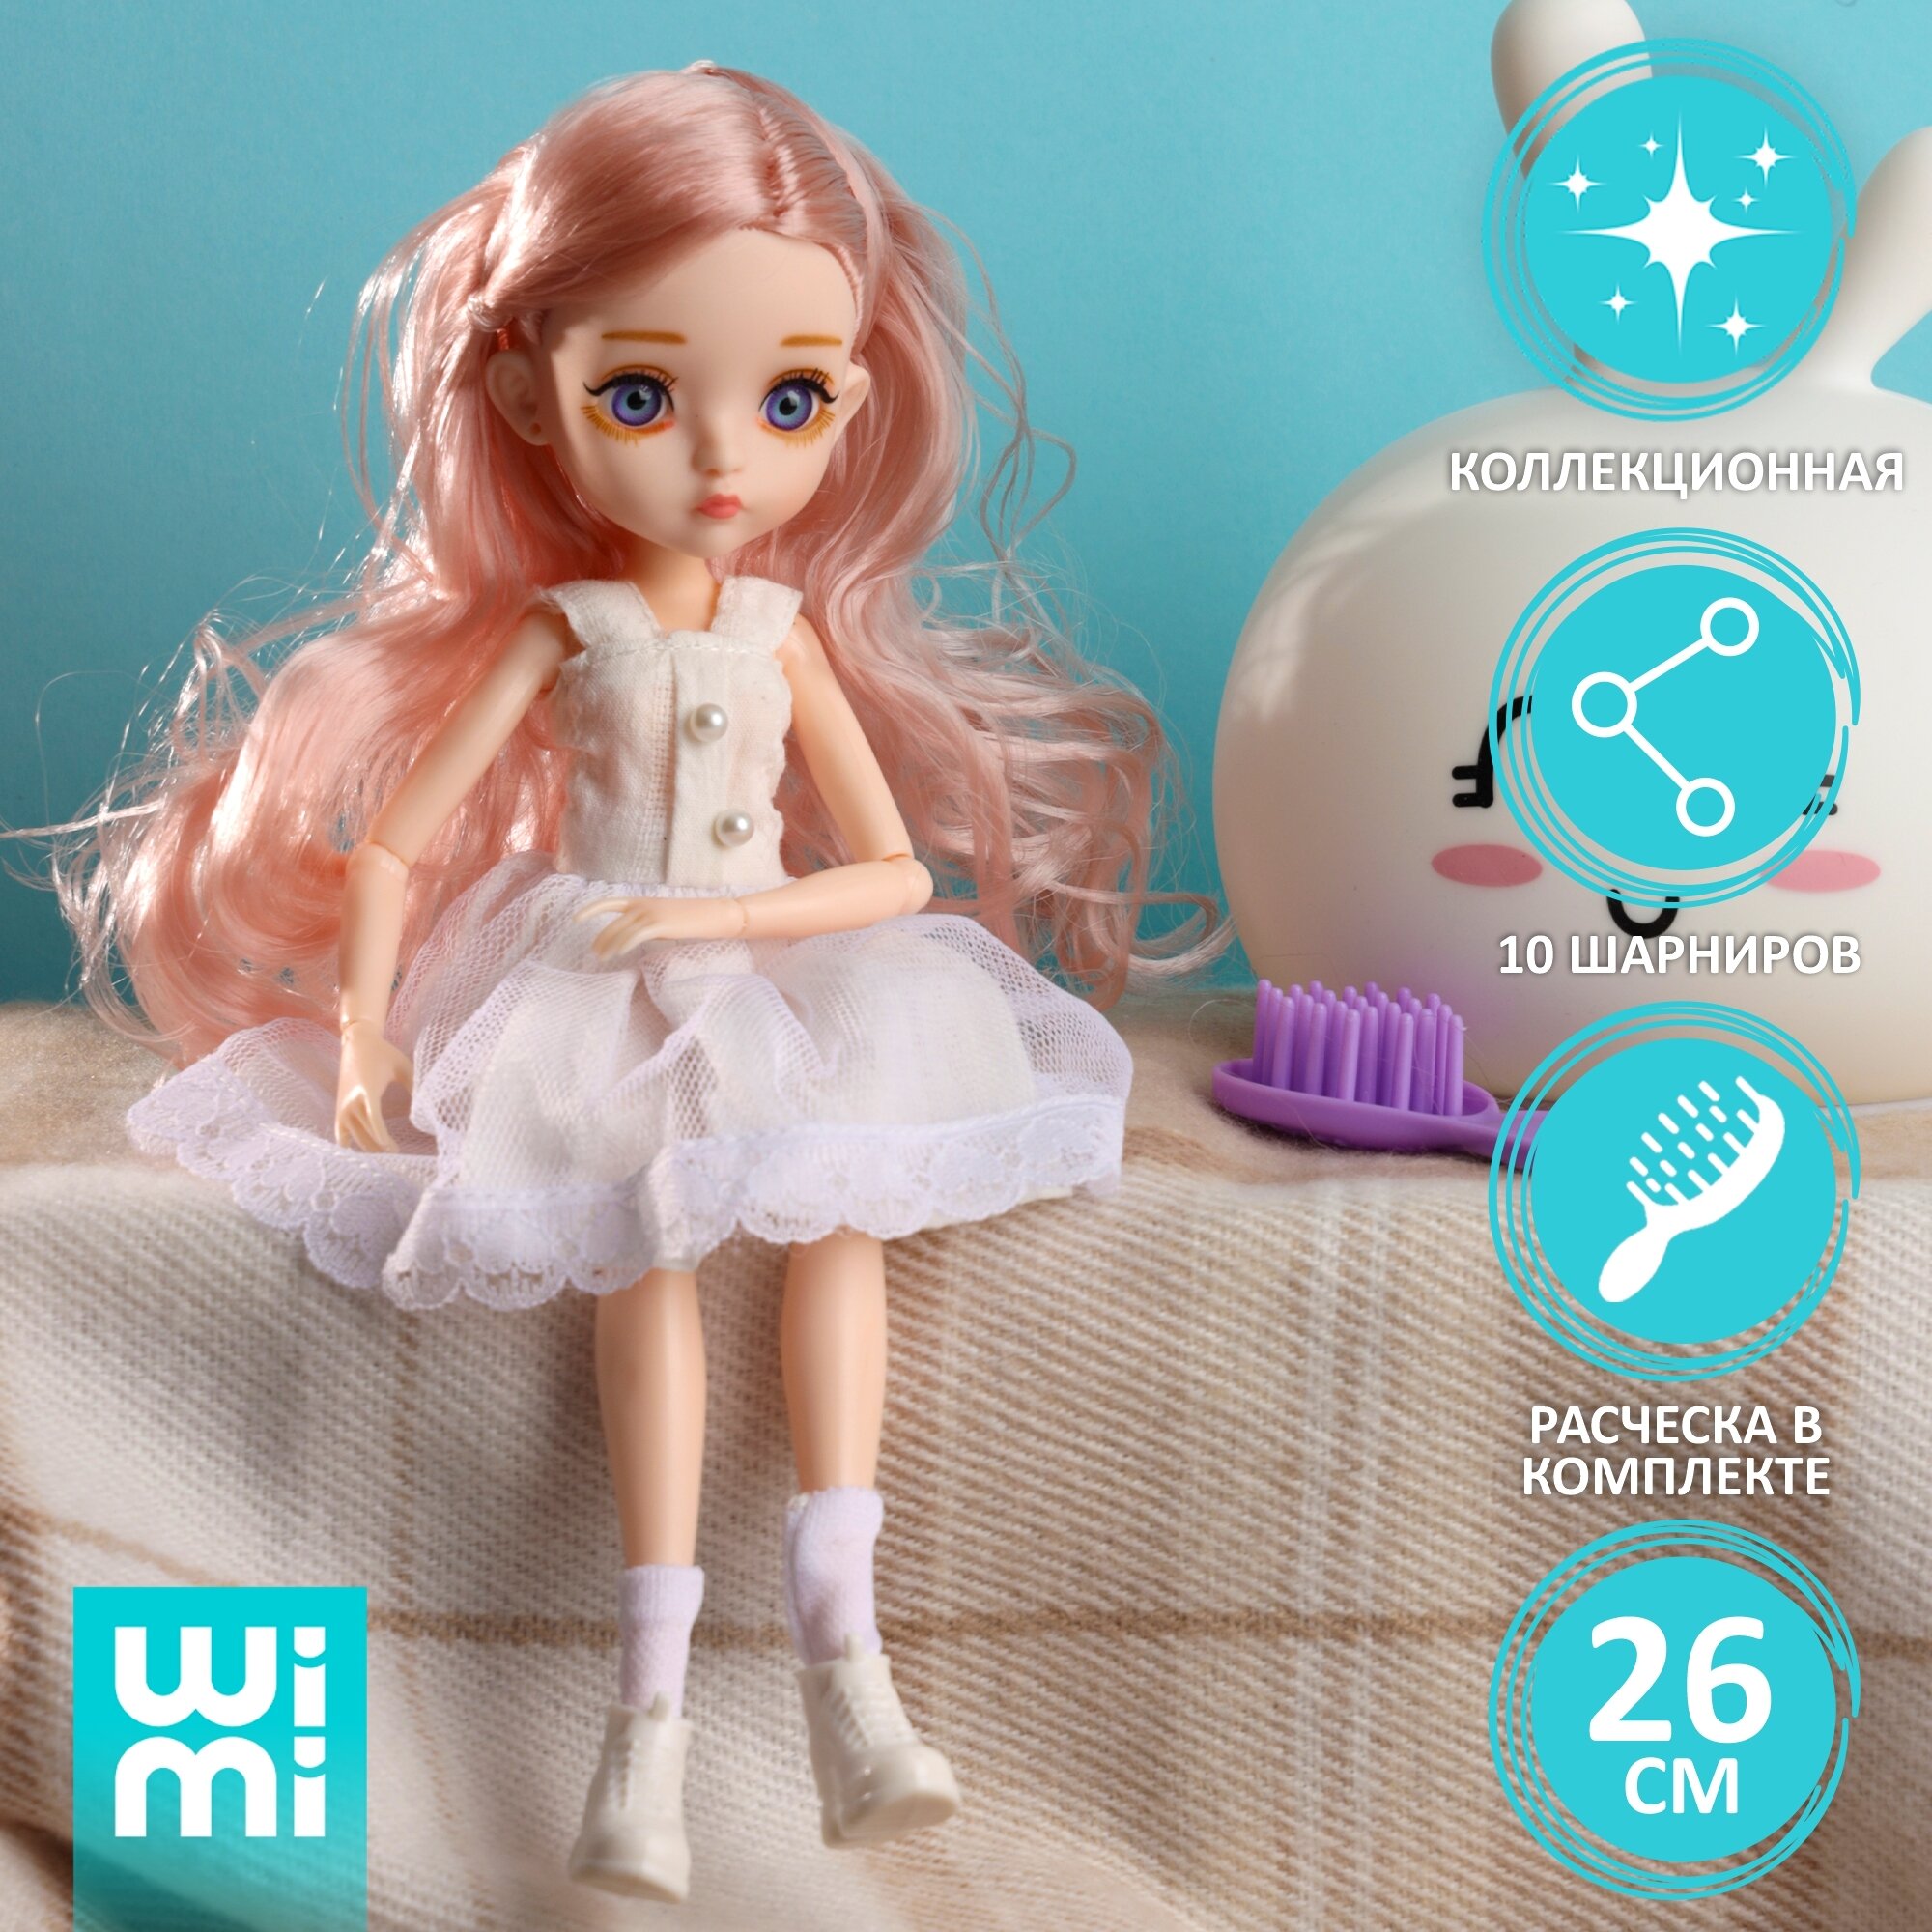 Шарнирная кукла WiMi, бжд куколка на шарнирах